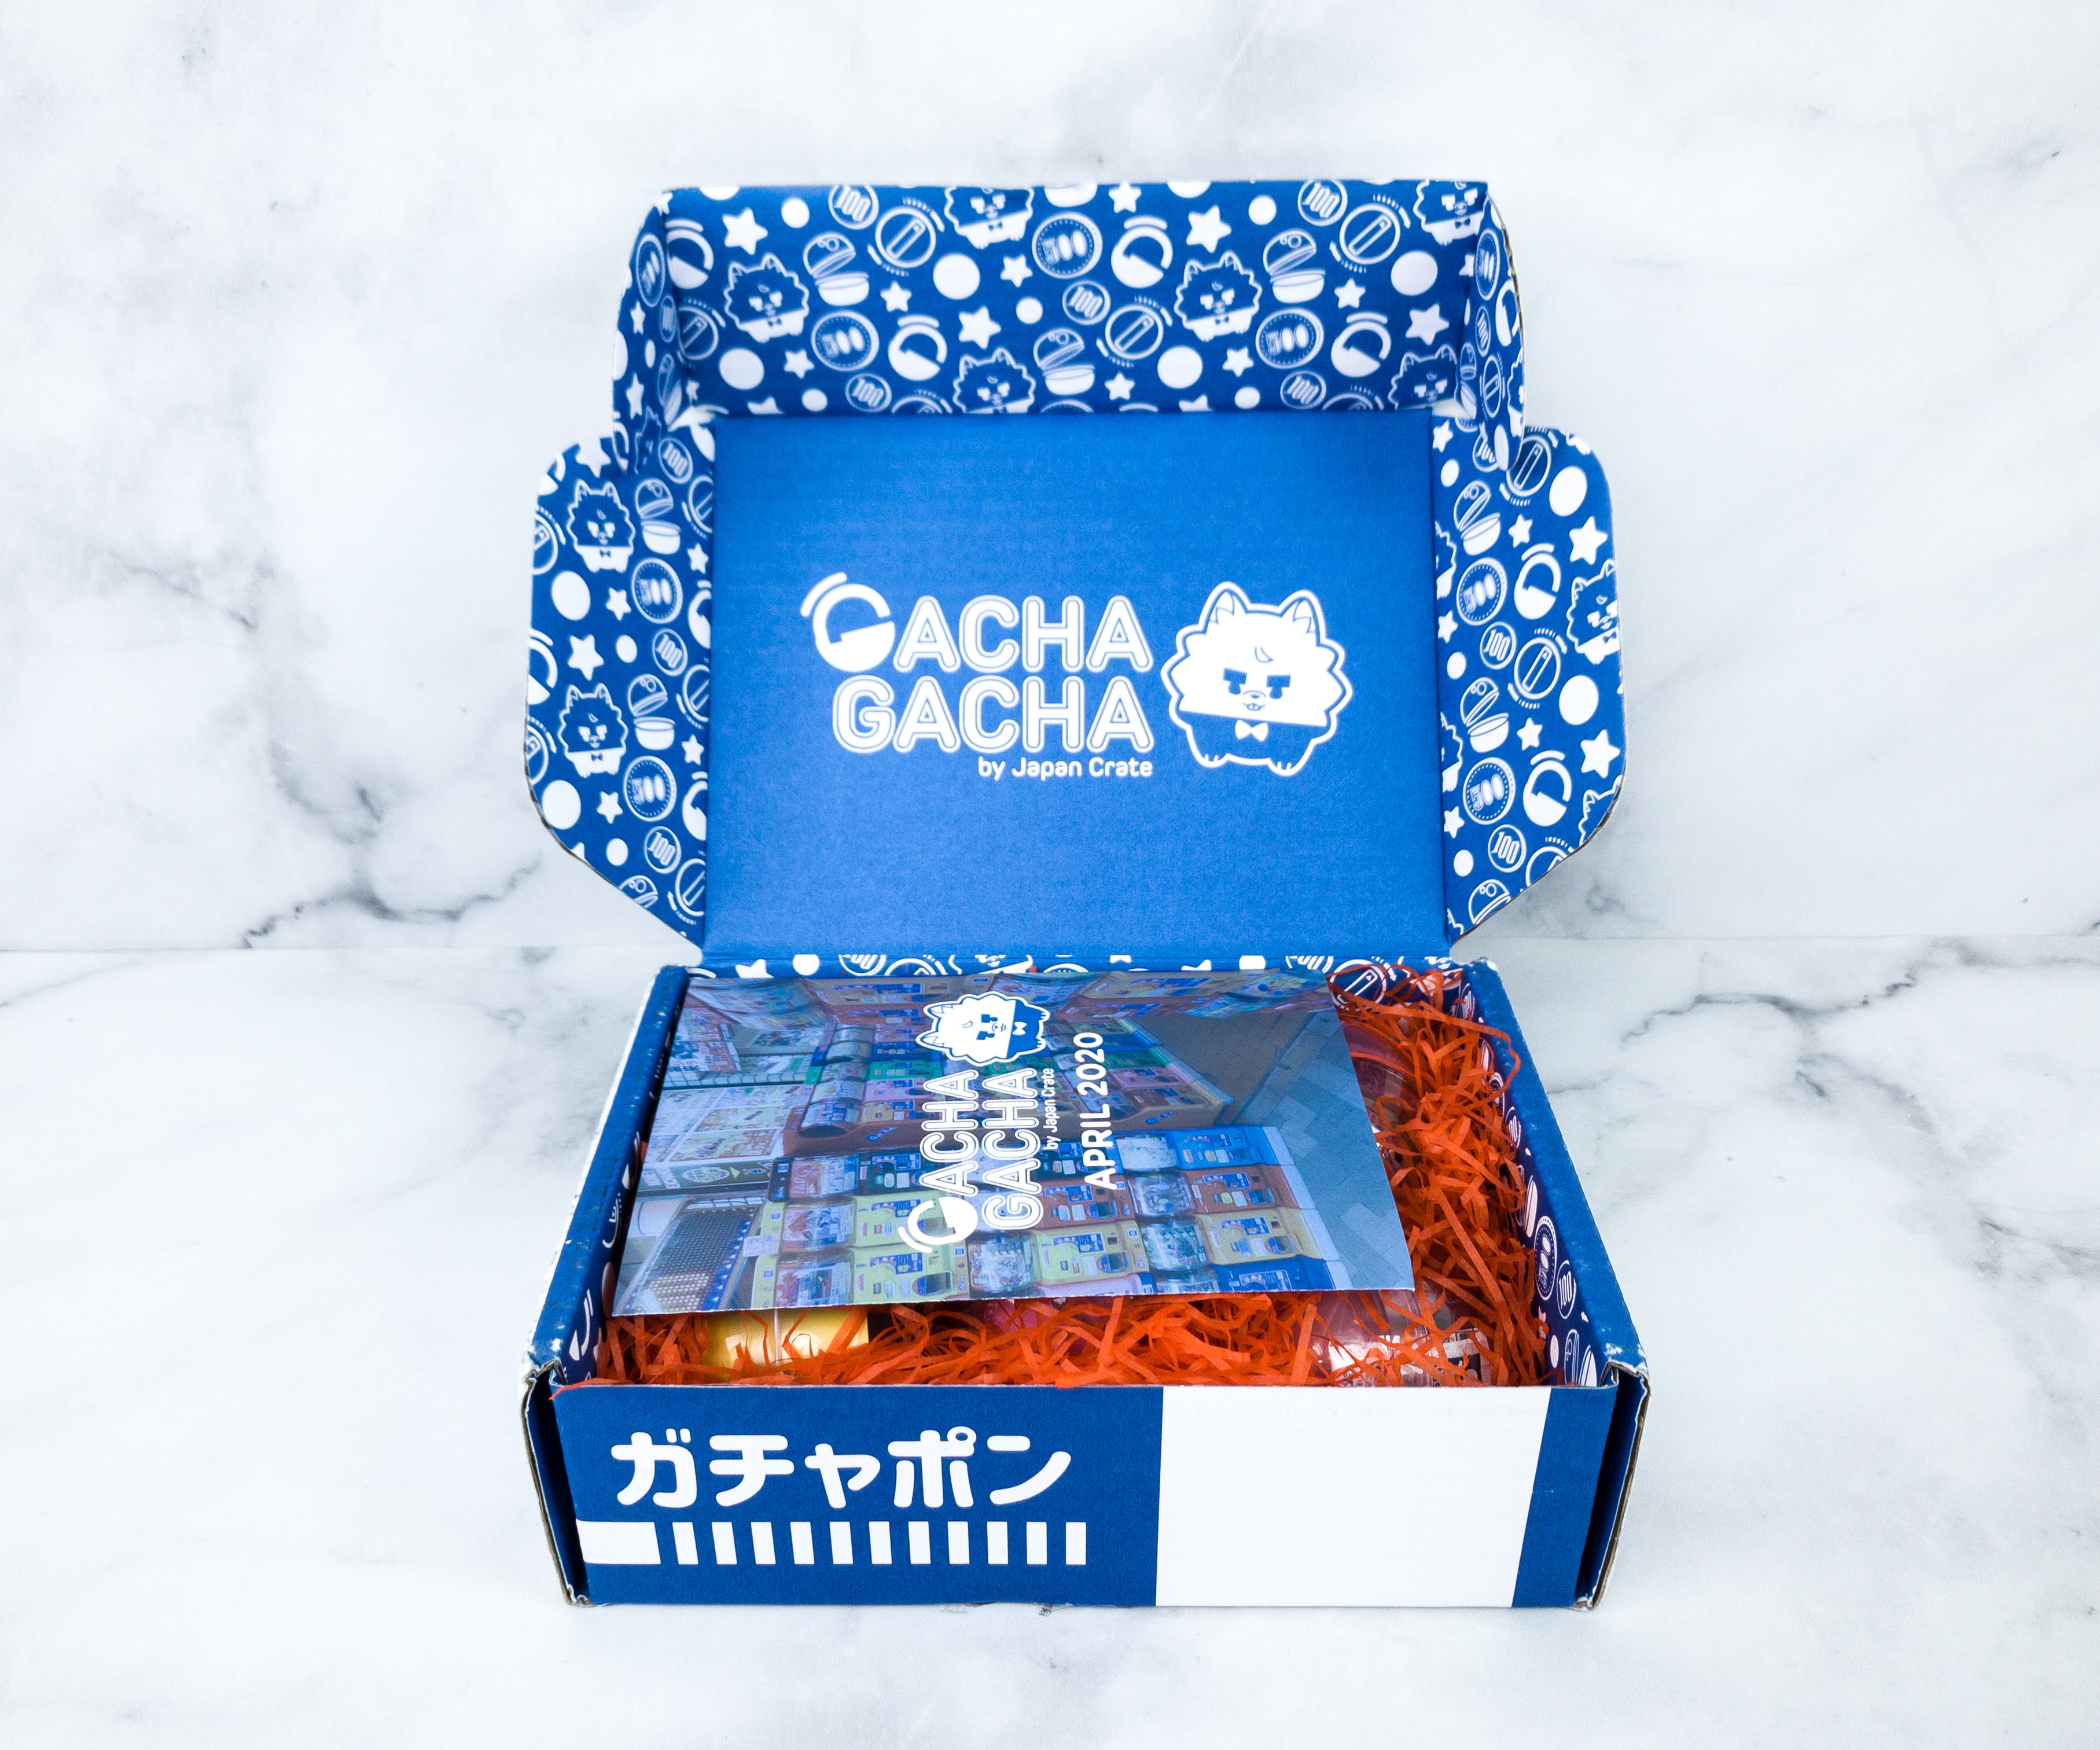 Gacha Gacha Crate April 2020 Subscription Box Review Coupon